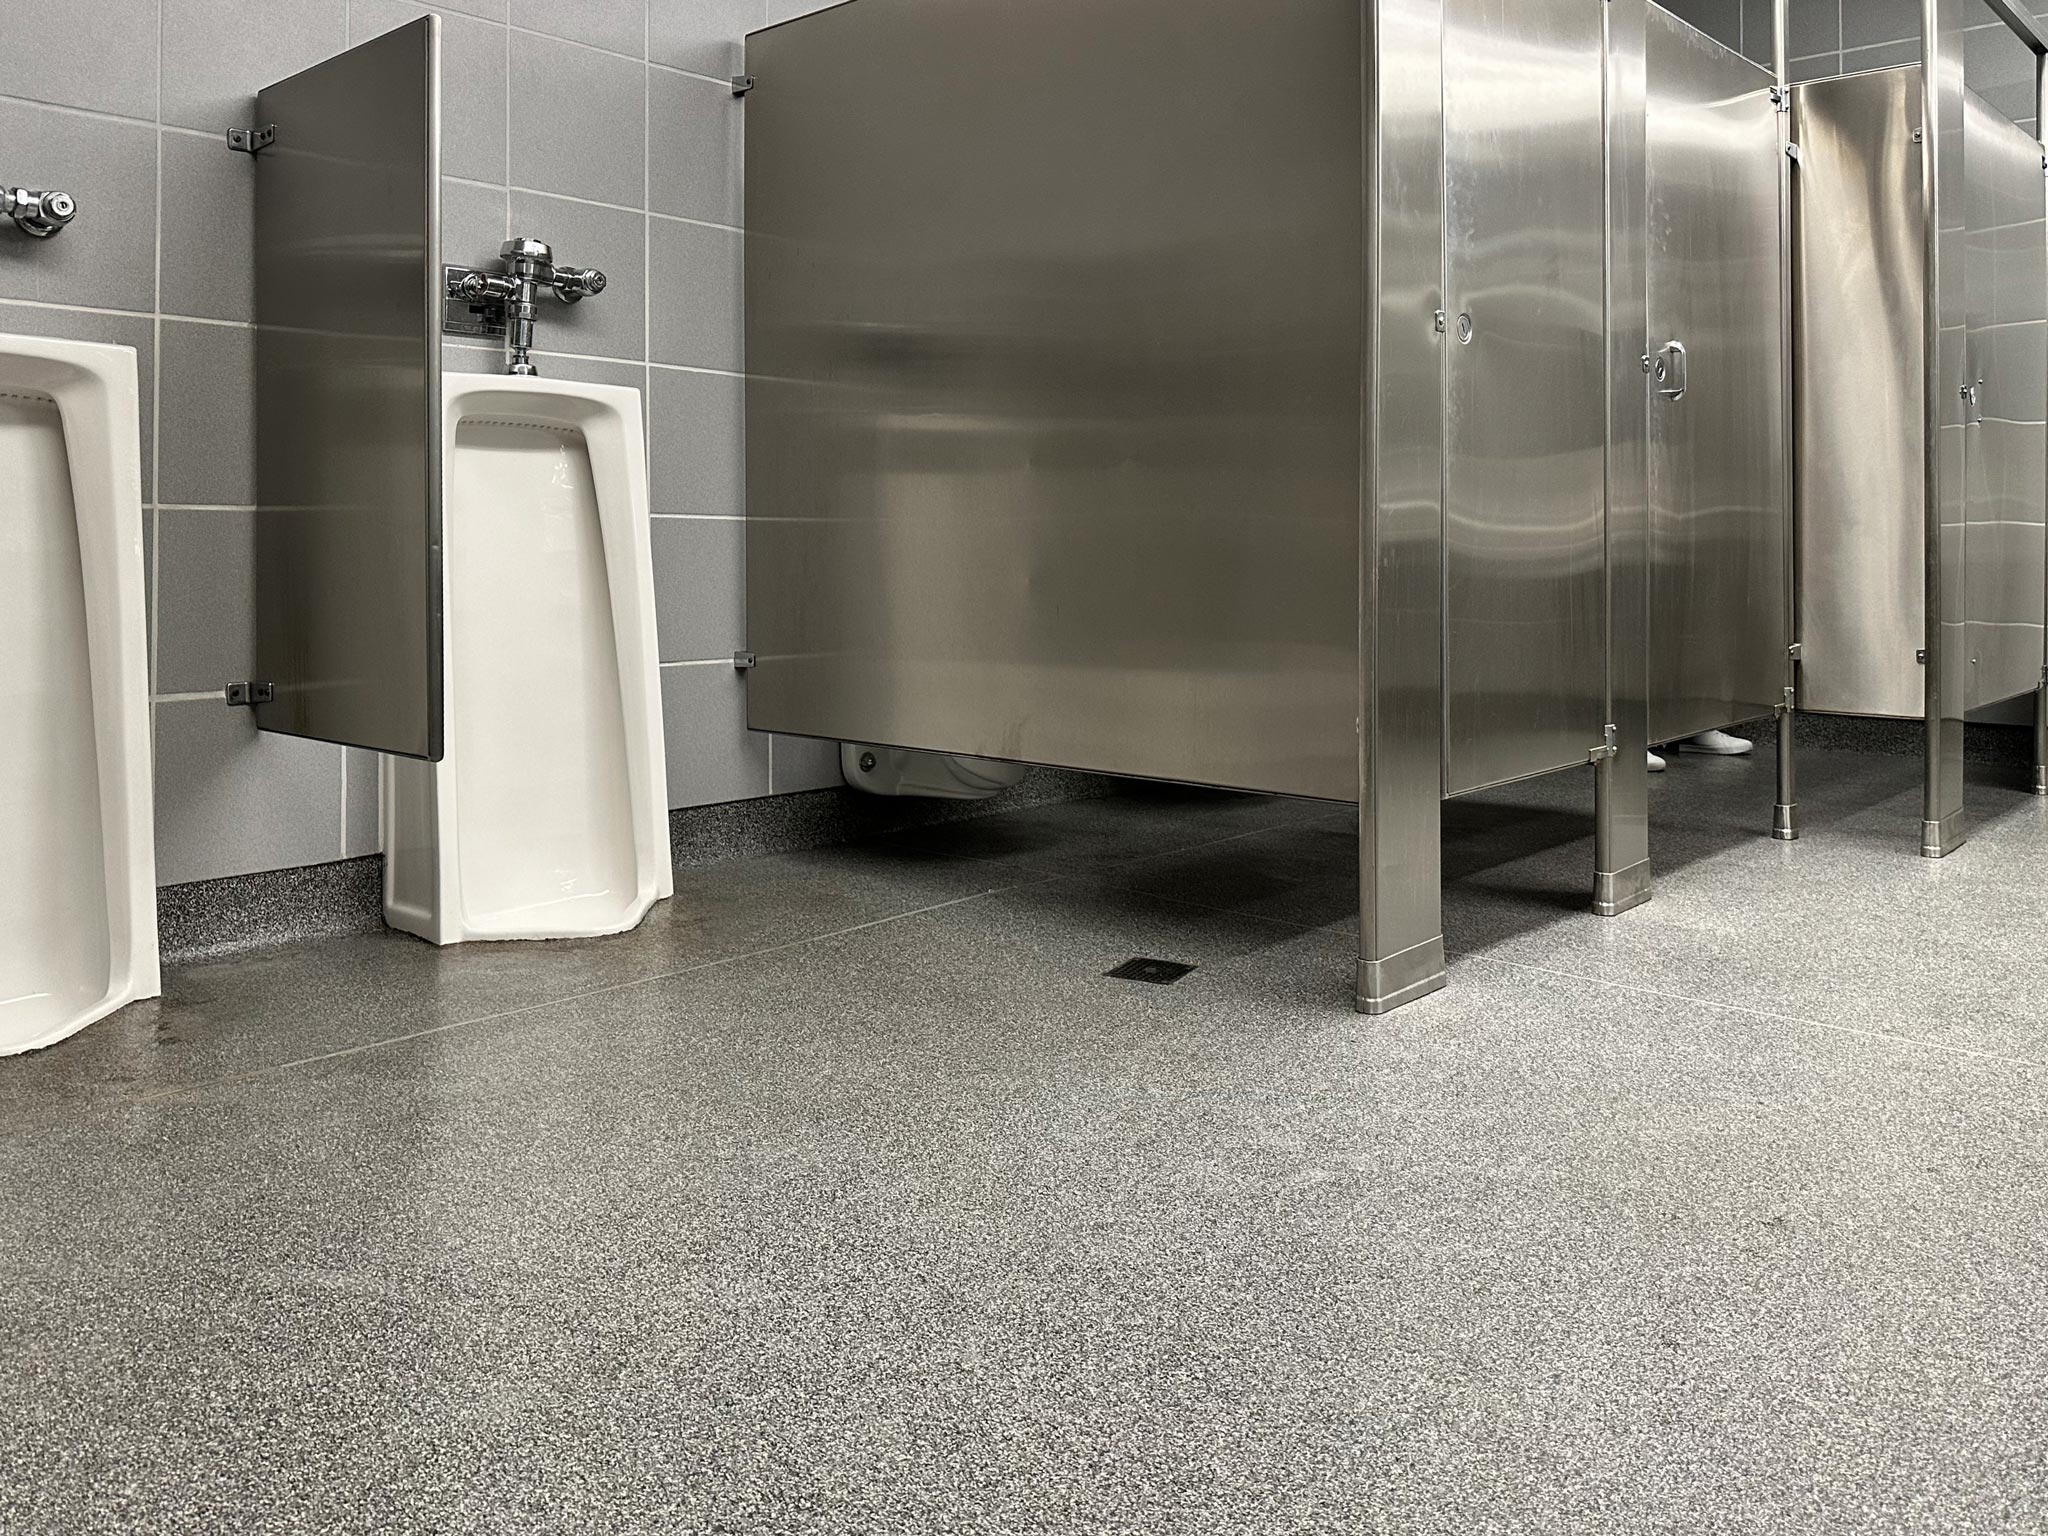 Restroom resin chip flooring by duraamen 2732 Public Restroom Plano TX | Duraamen Engineered Products Inc